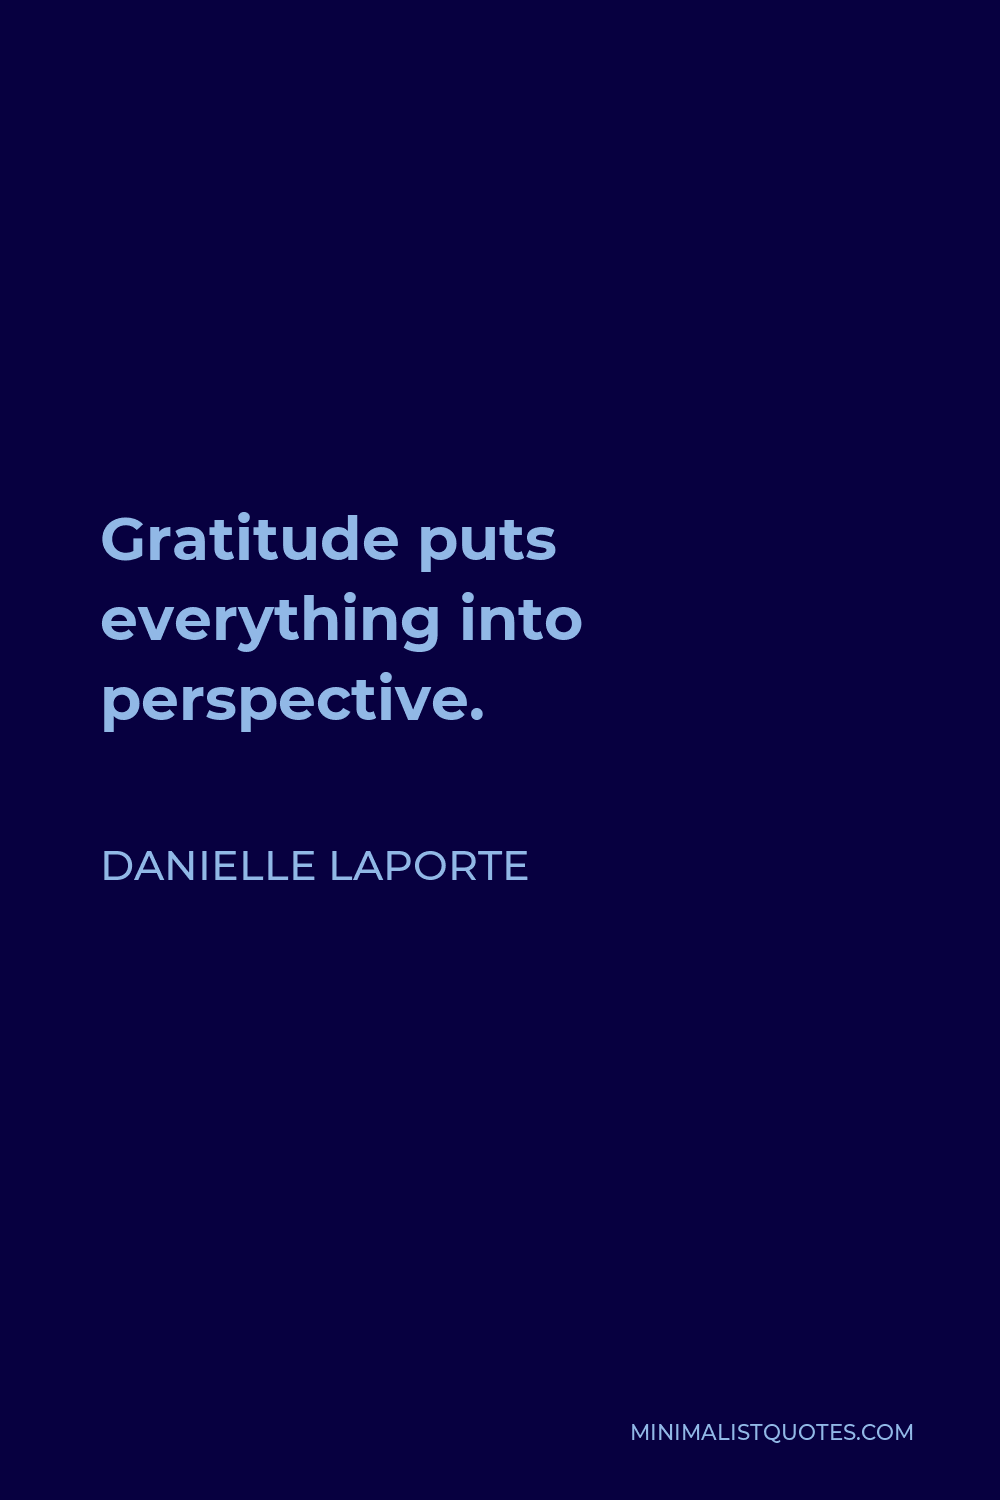 Danielle LaPorte Quote - Gratitude puts everything into perspective.